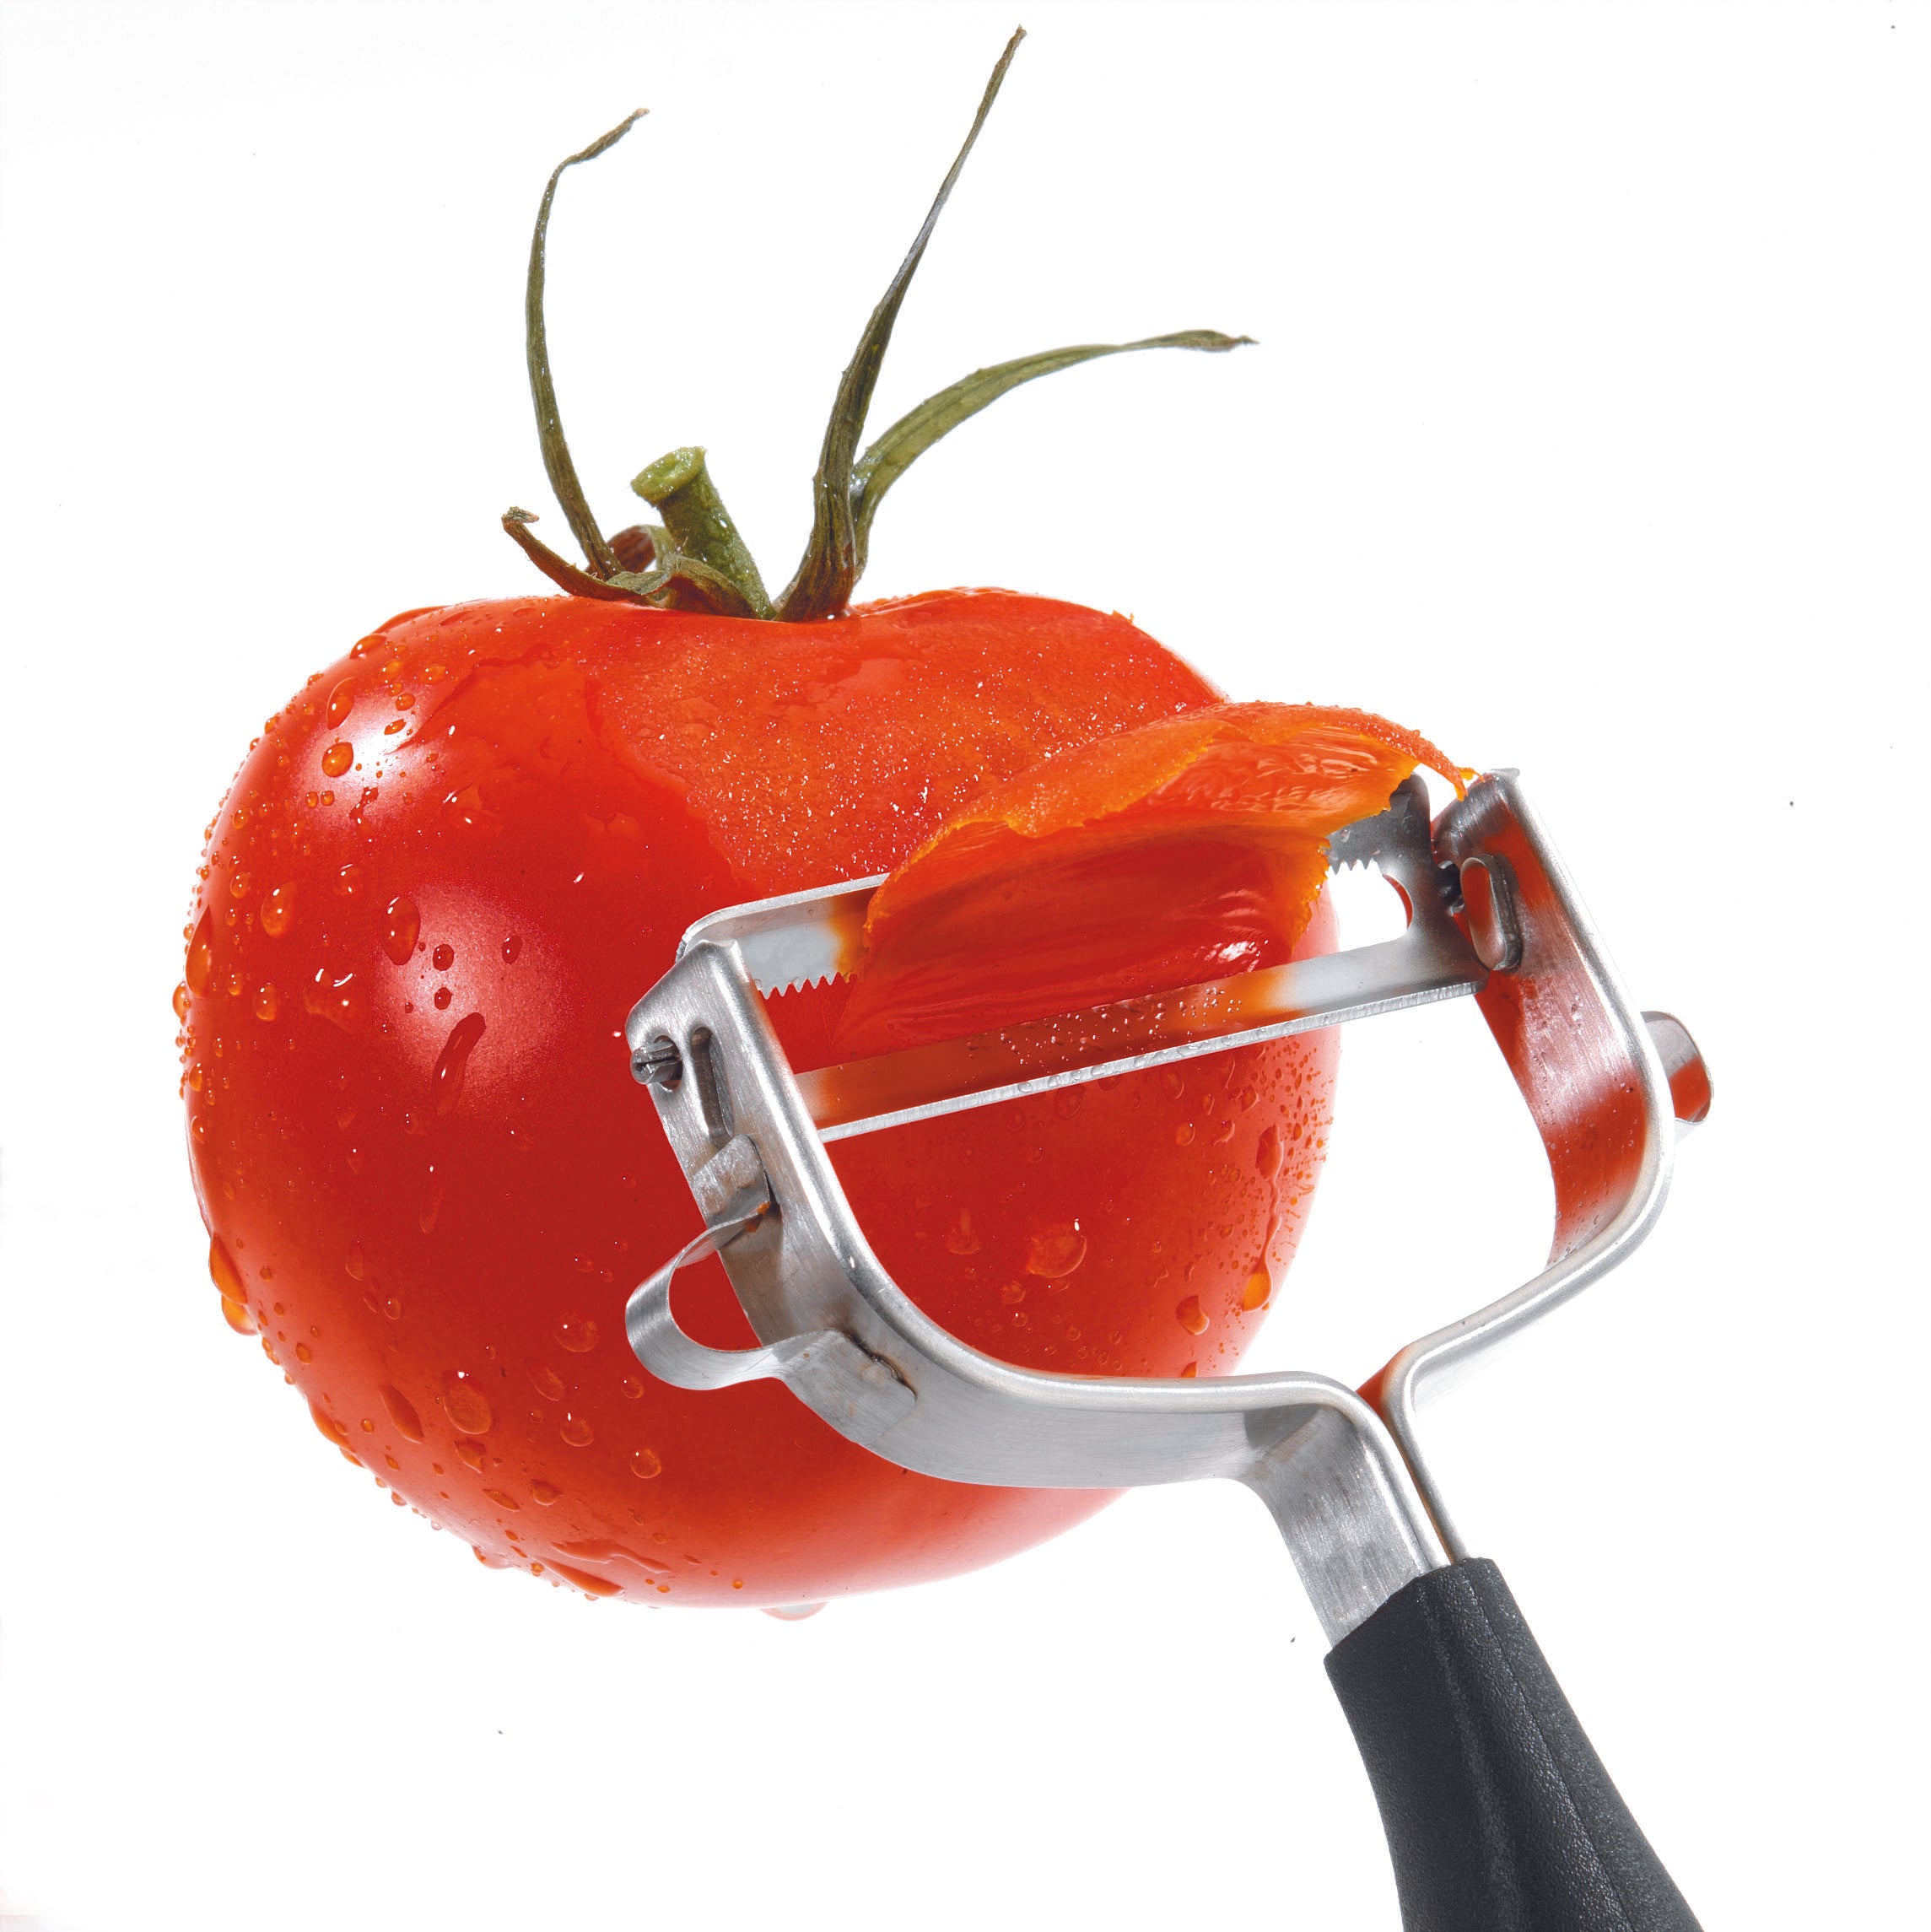 Tomato Peeler Pro grade – The Sharp Cook